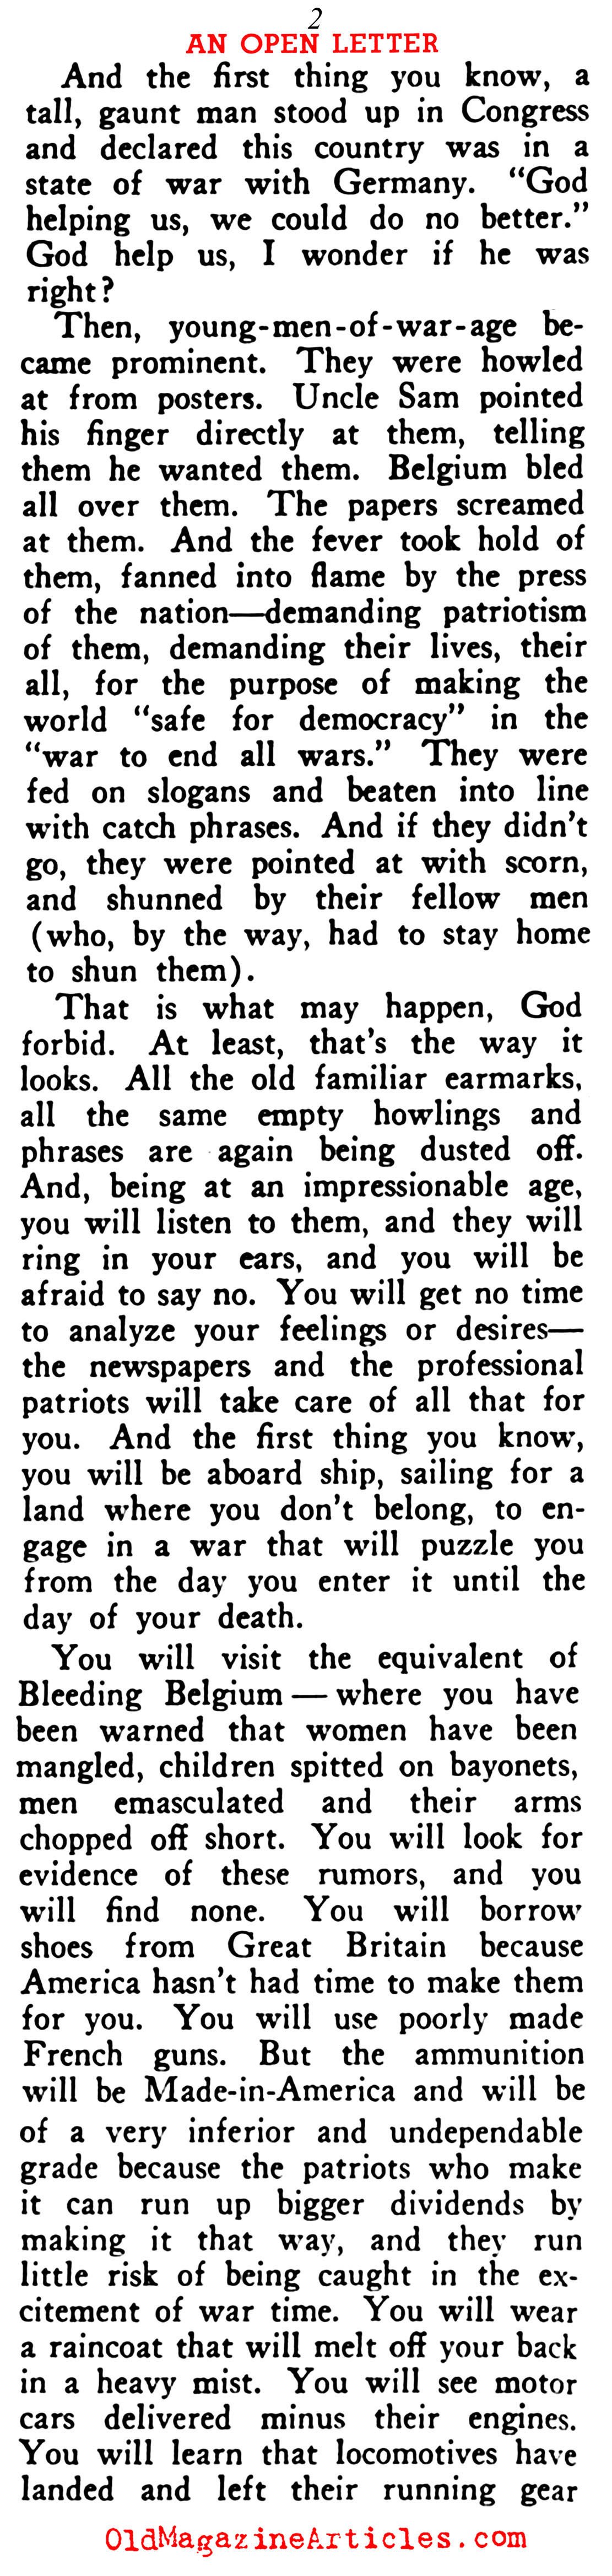 A Veteran Against War (Rob Wagner's Script Magazine, 1938)